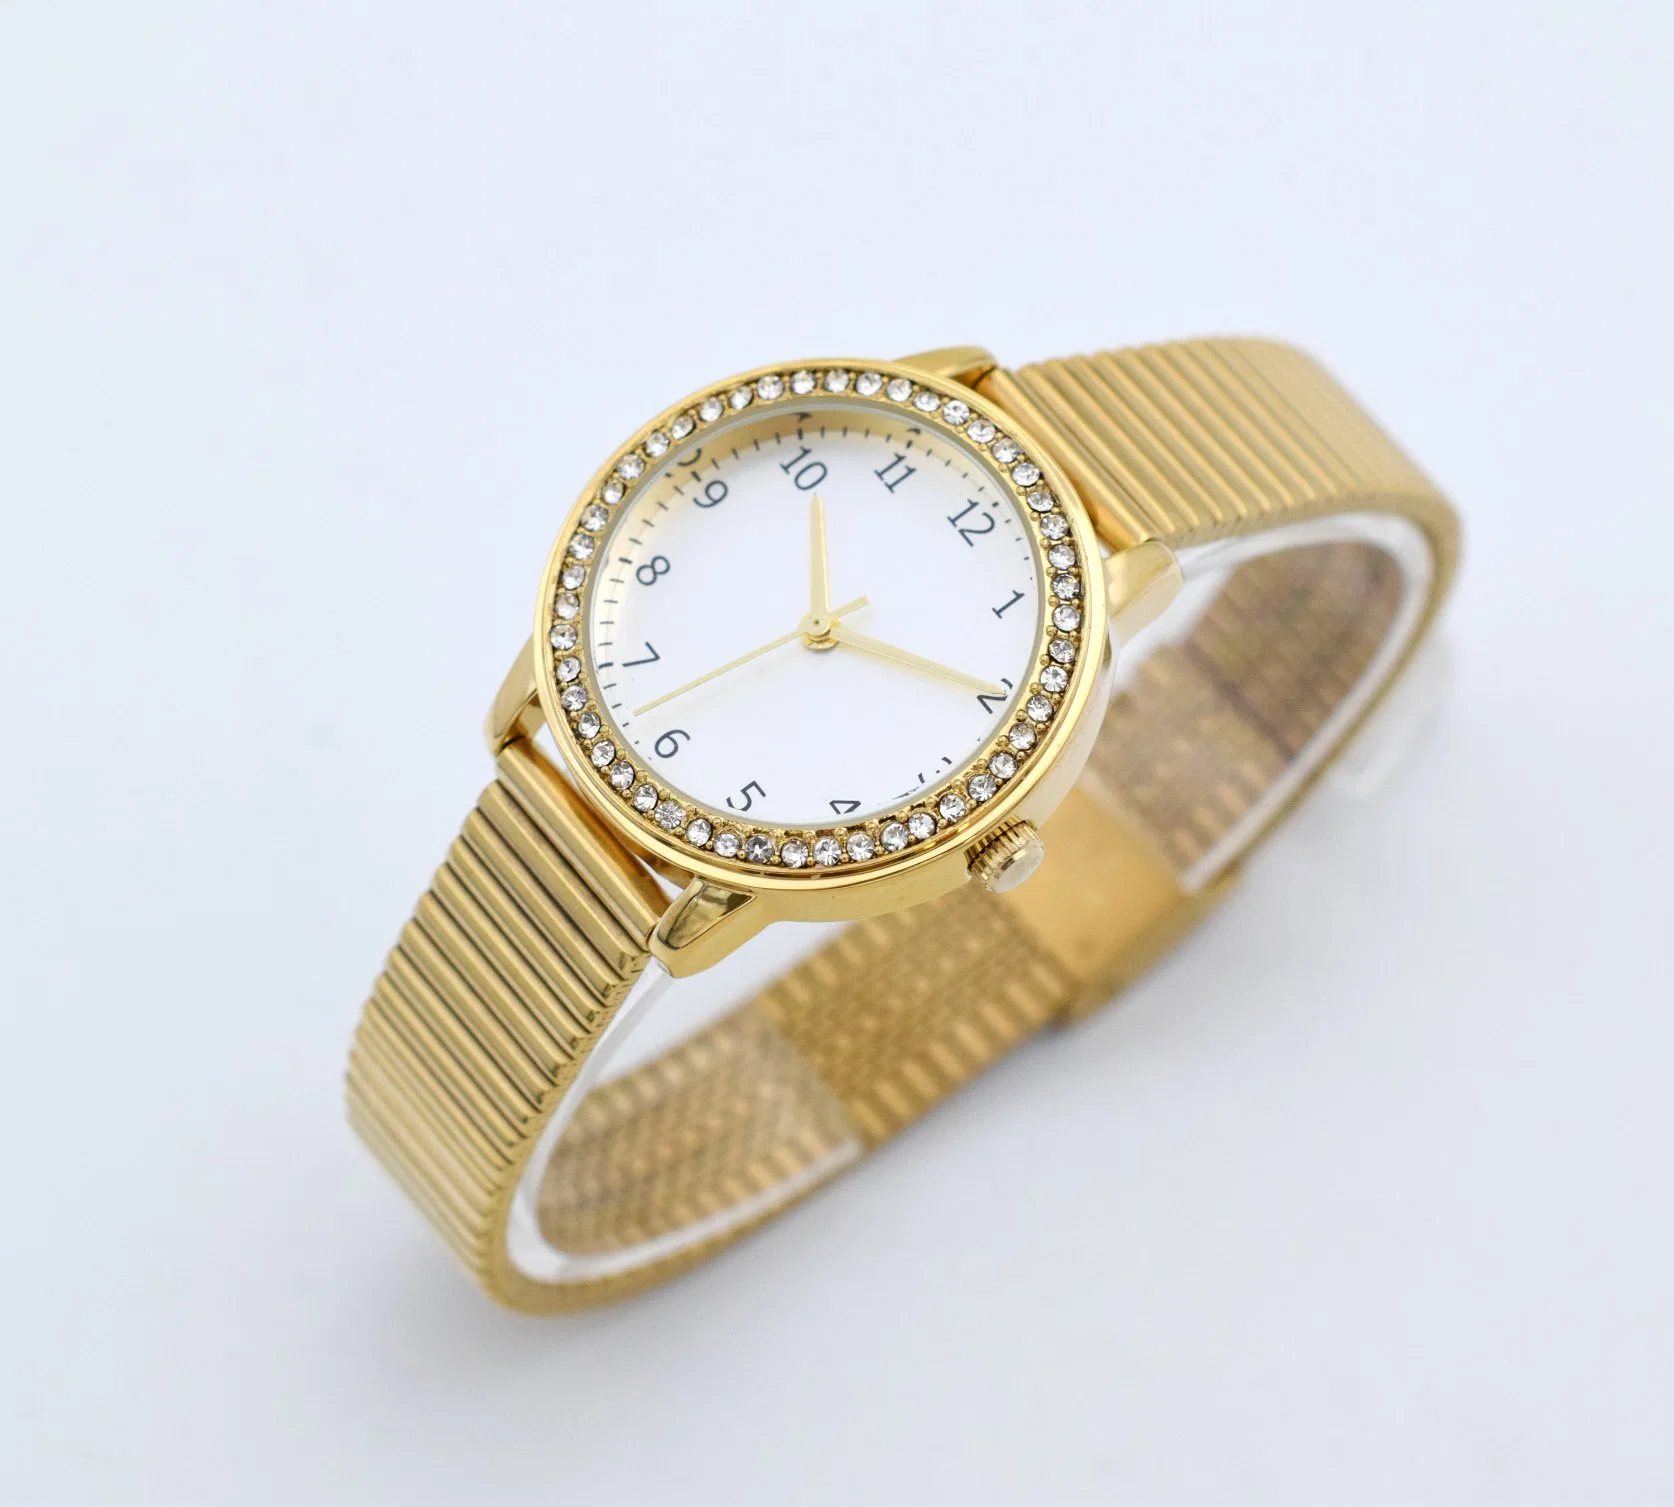 Stainless Steel Watch Gift Watch Quartz Watch Fashion Watch Lady Promotional Watch